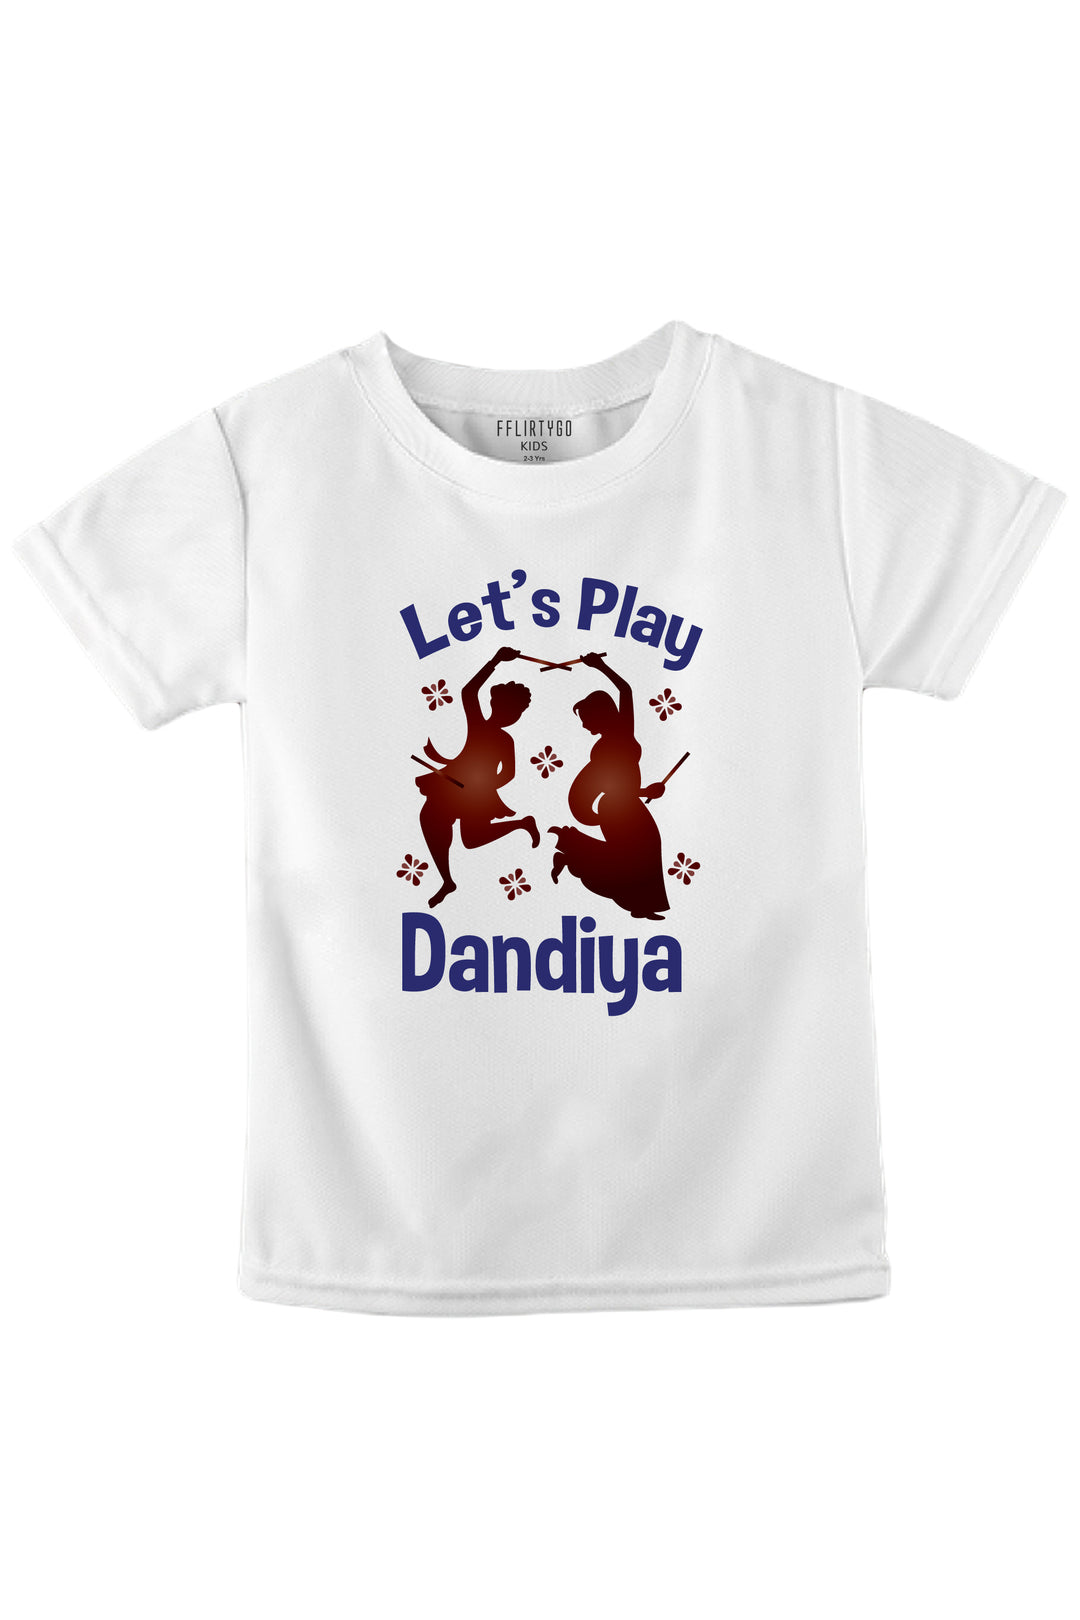 Let's Play Dandiya Kids T Shirt